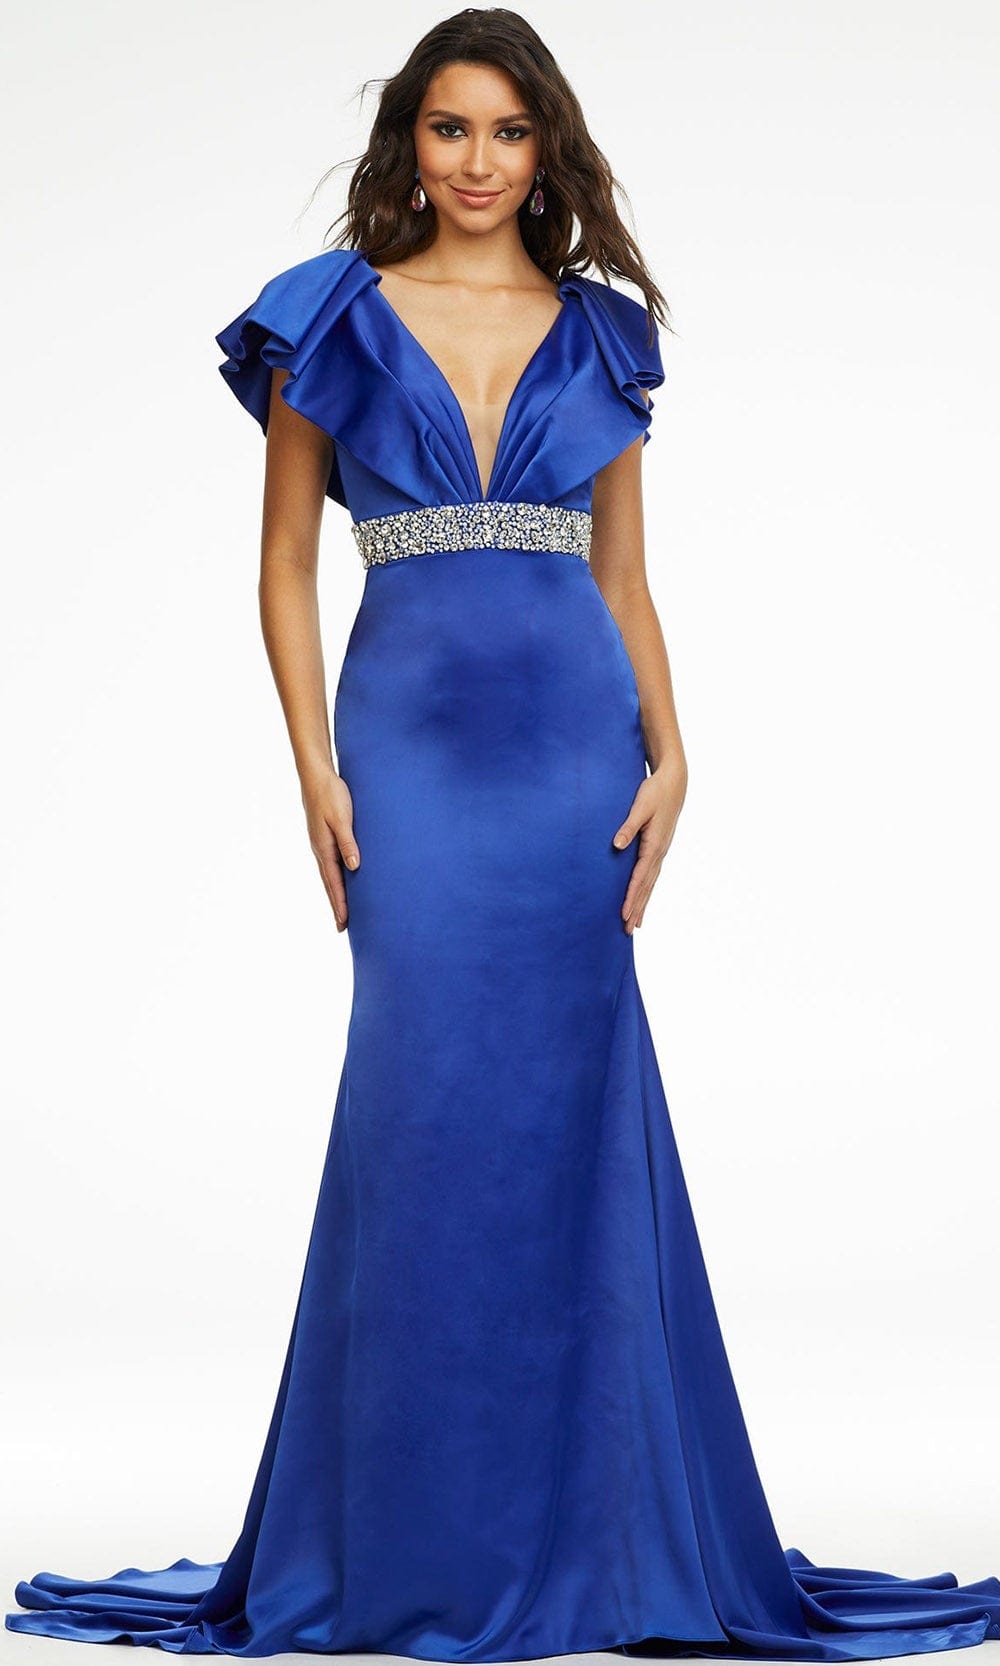 Ashley Lauren - 11130 Satin Short Ruffled Sleeve Evening Gown Prom Dresses